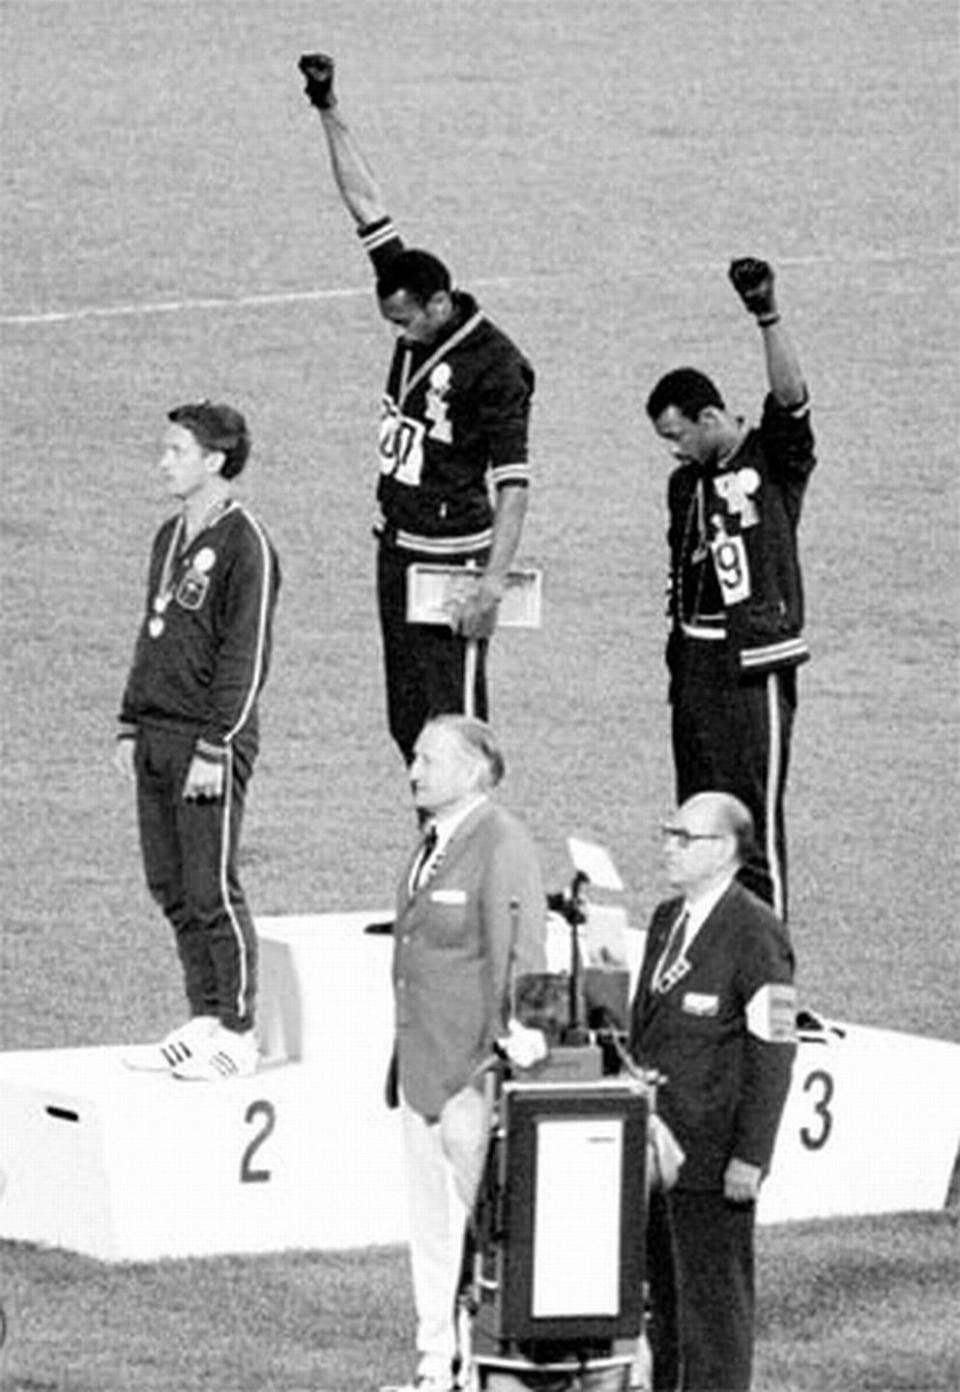 1968, Mexico City: The Black Power Salute